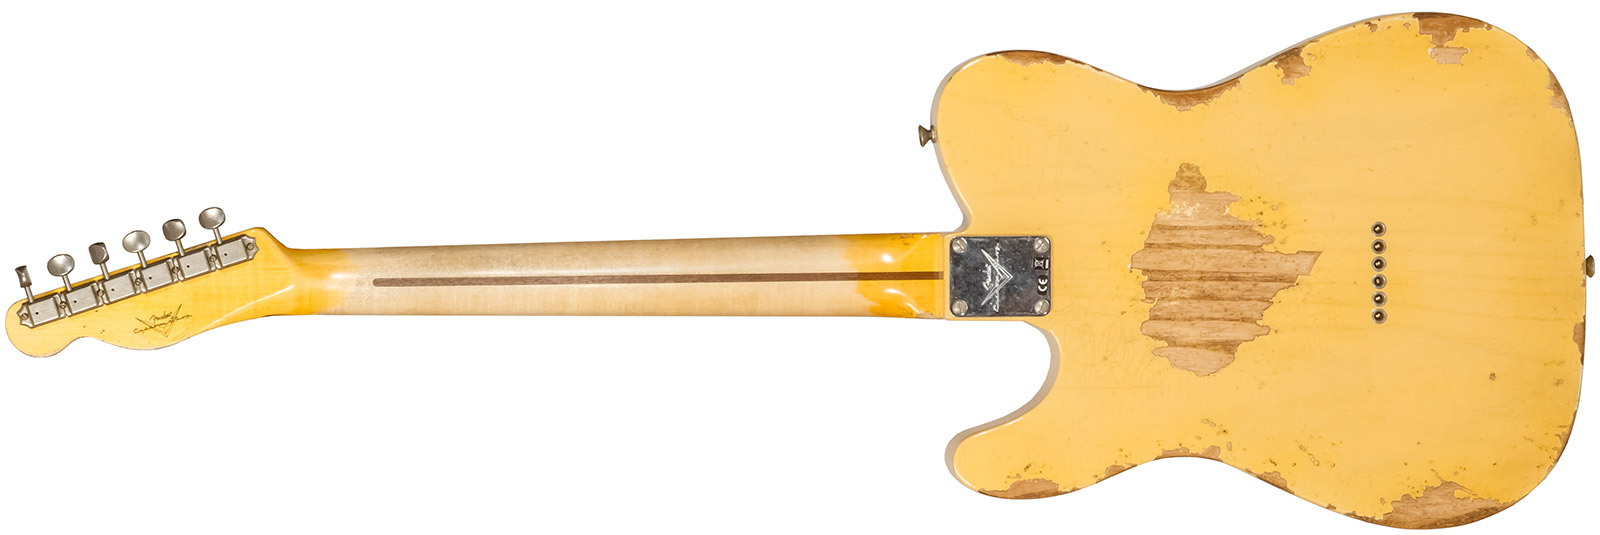 Fender Custom Shop Tele 1952 2s Ht Mn #r131281 - Heavy Relic Aged Nocaster Blonde - Televorm elektrische gitaar - Variation 1